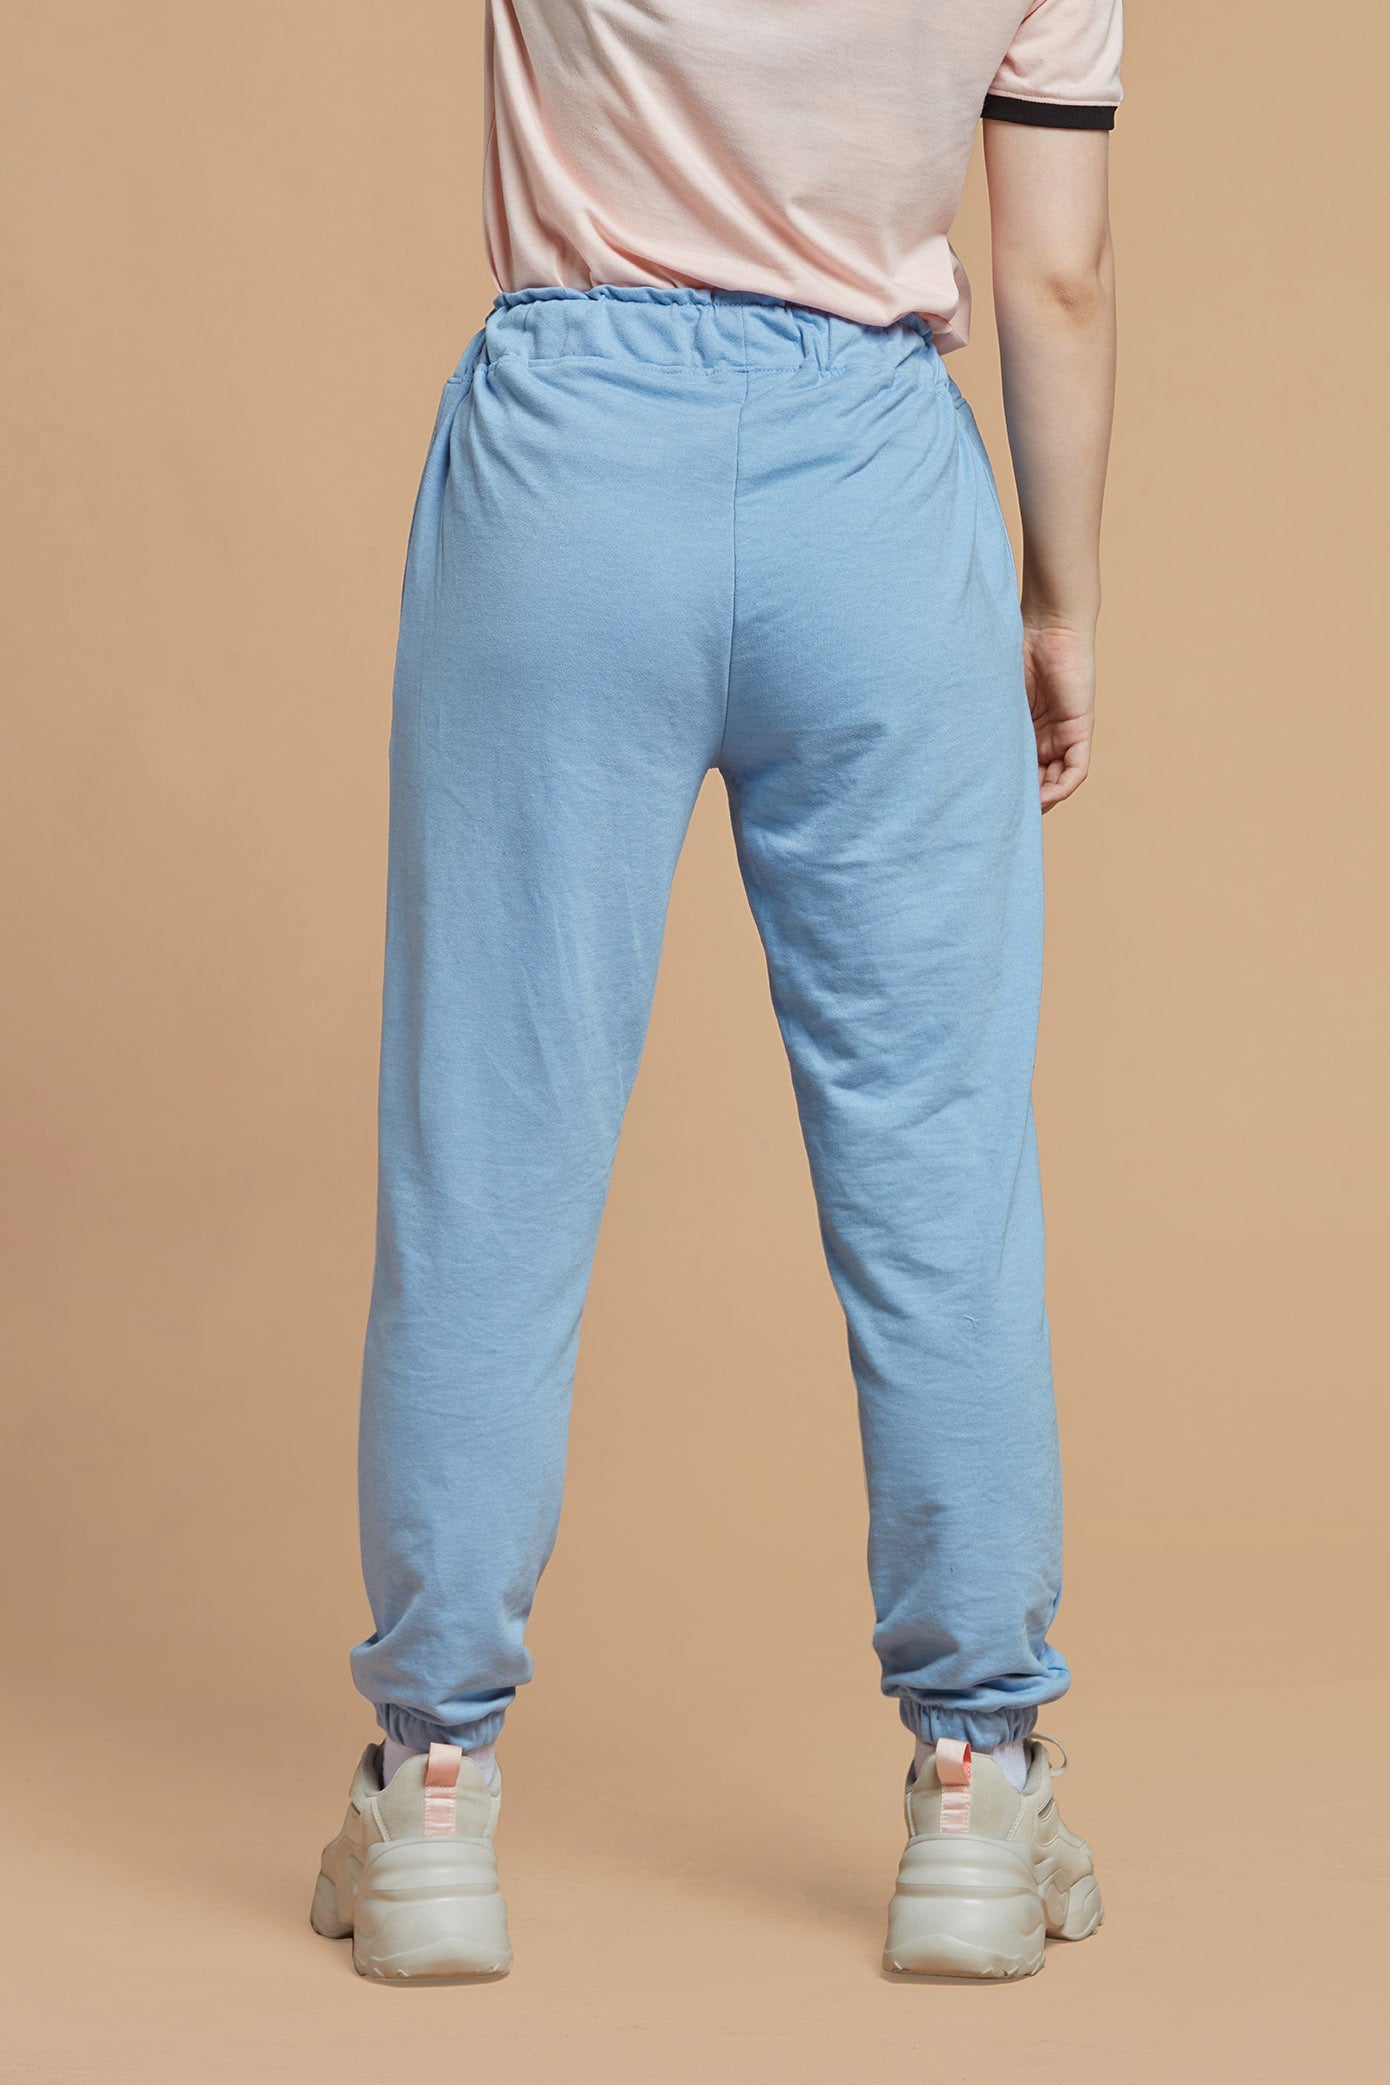 Buy Culture Men's Slim Fit Regular Casual Trousers (28, Sky Blue Light),  CUL123, 47 at Amazon.in